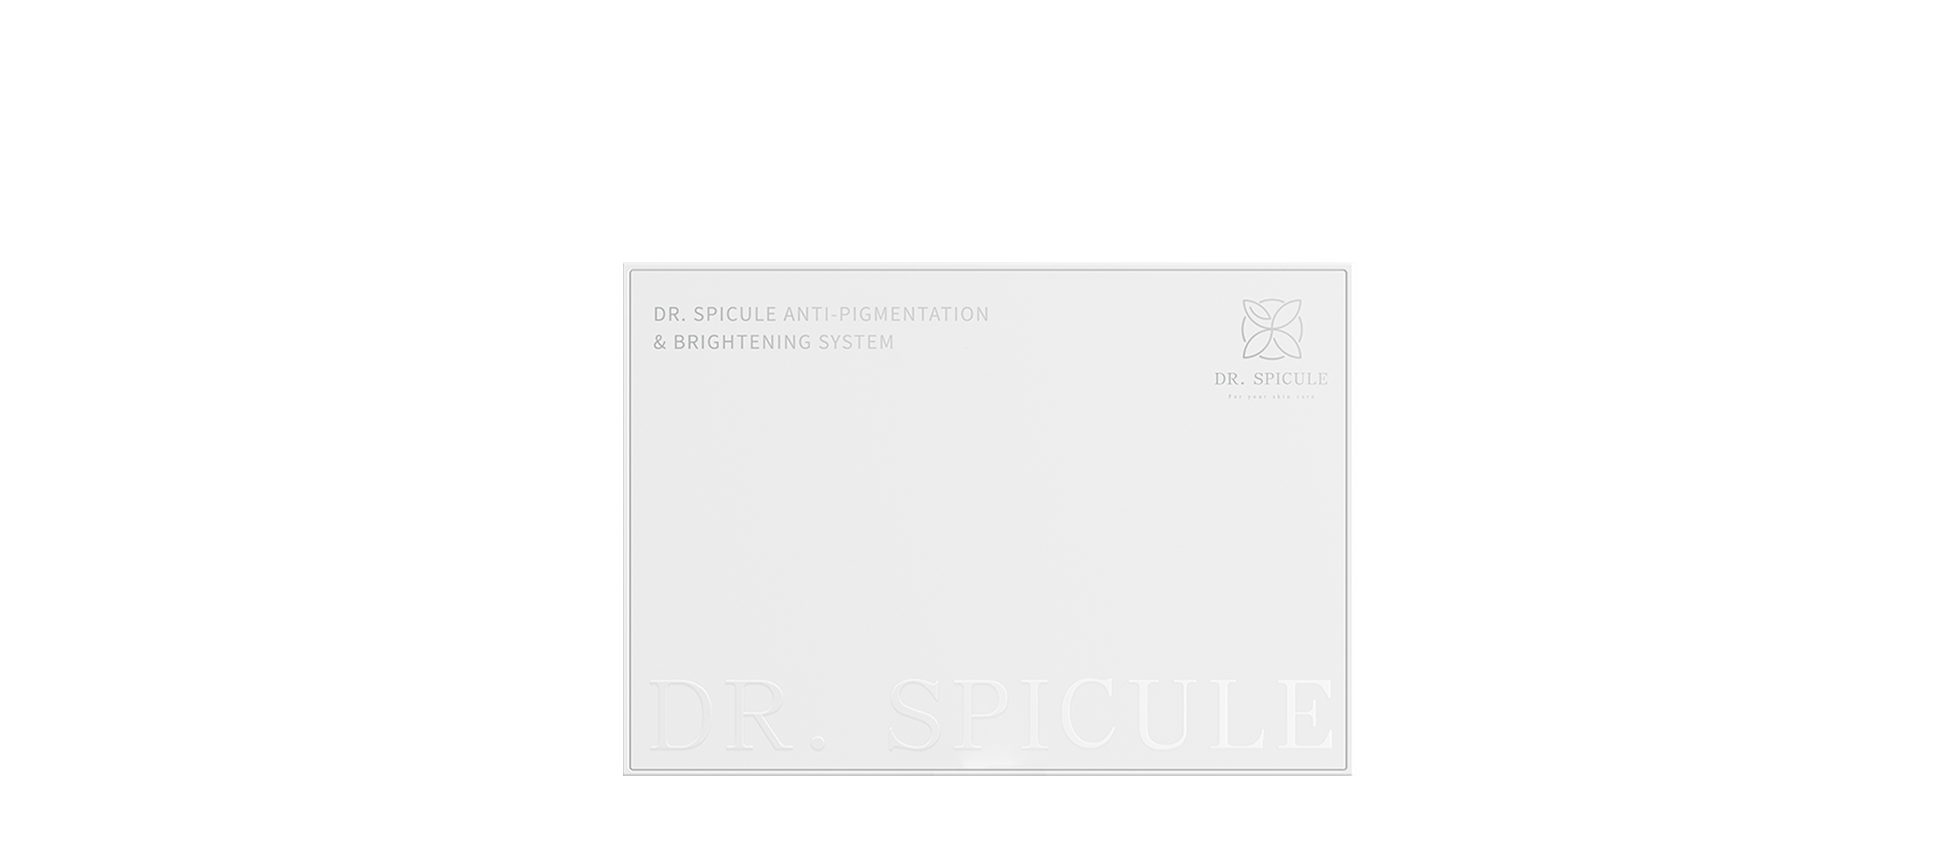 DR. SPICULE Anti-Pigmentation & Brightening System